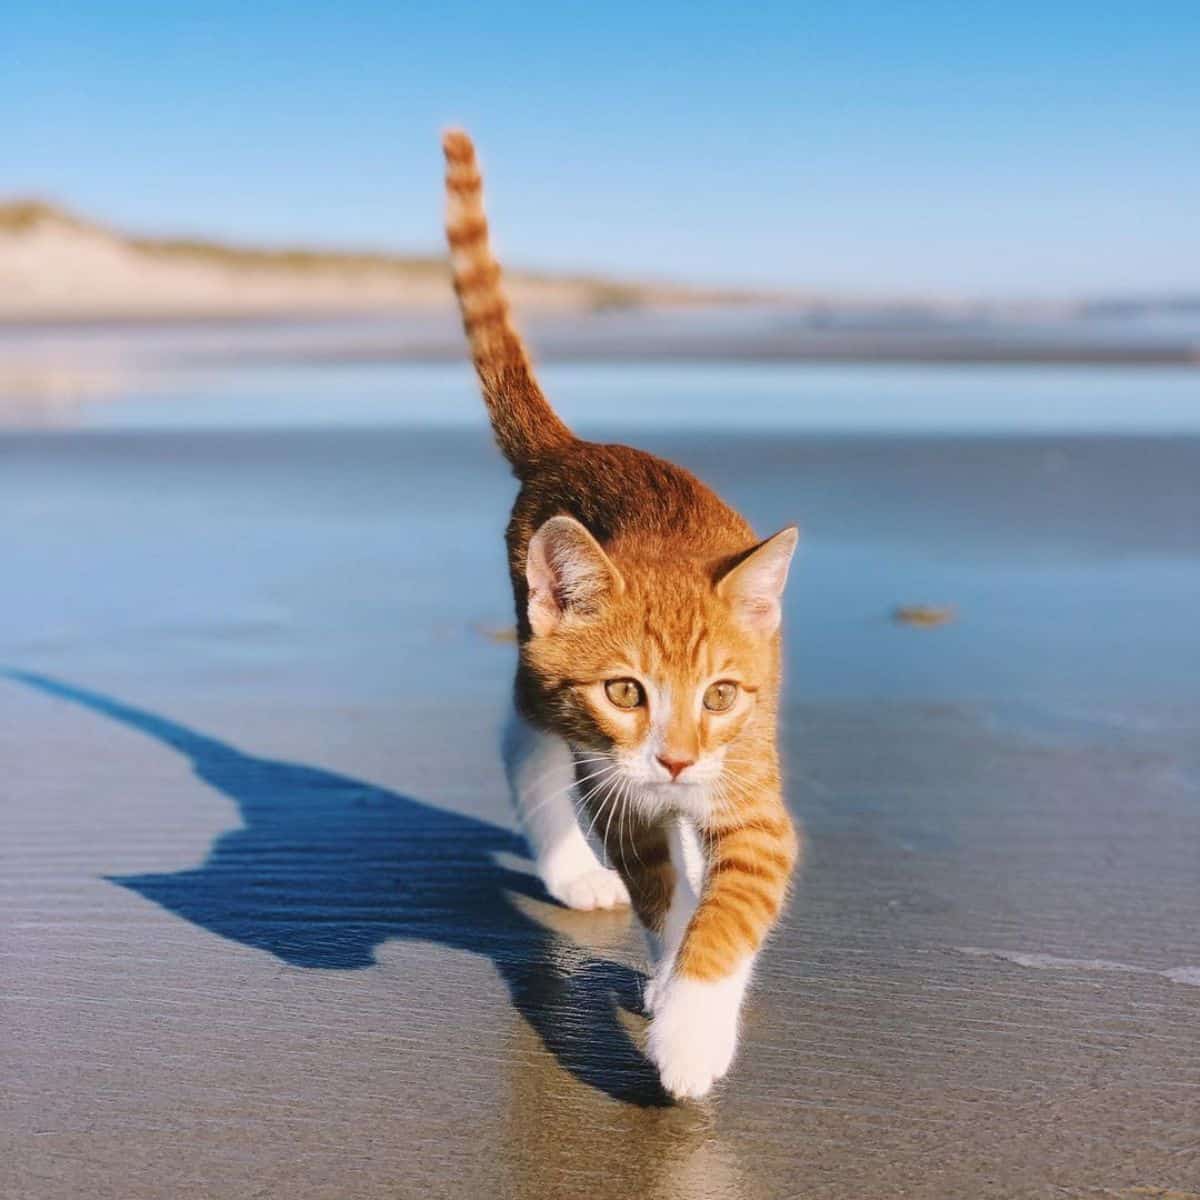 ginger cat walking slow on the ocean beach